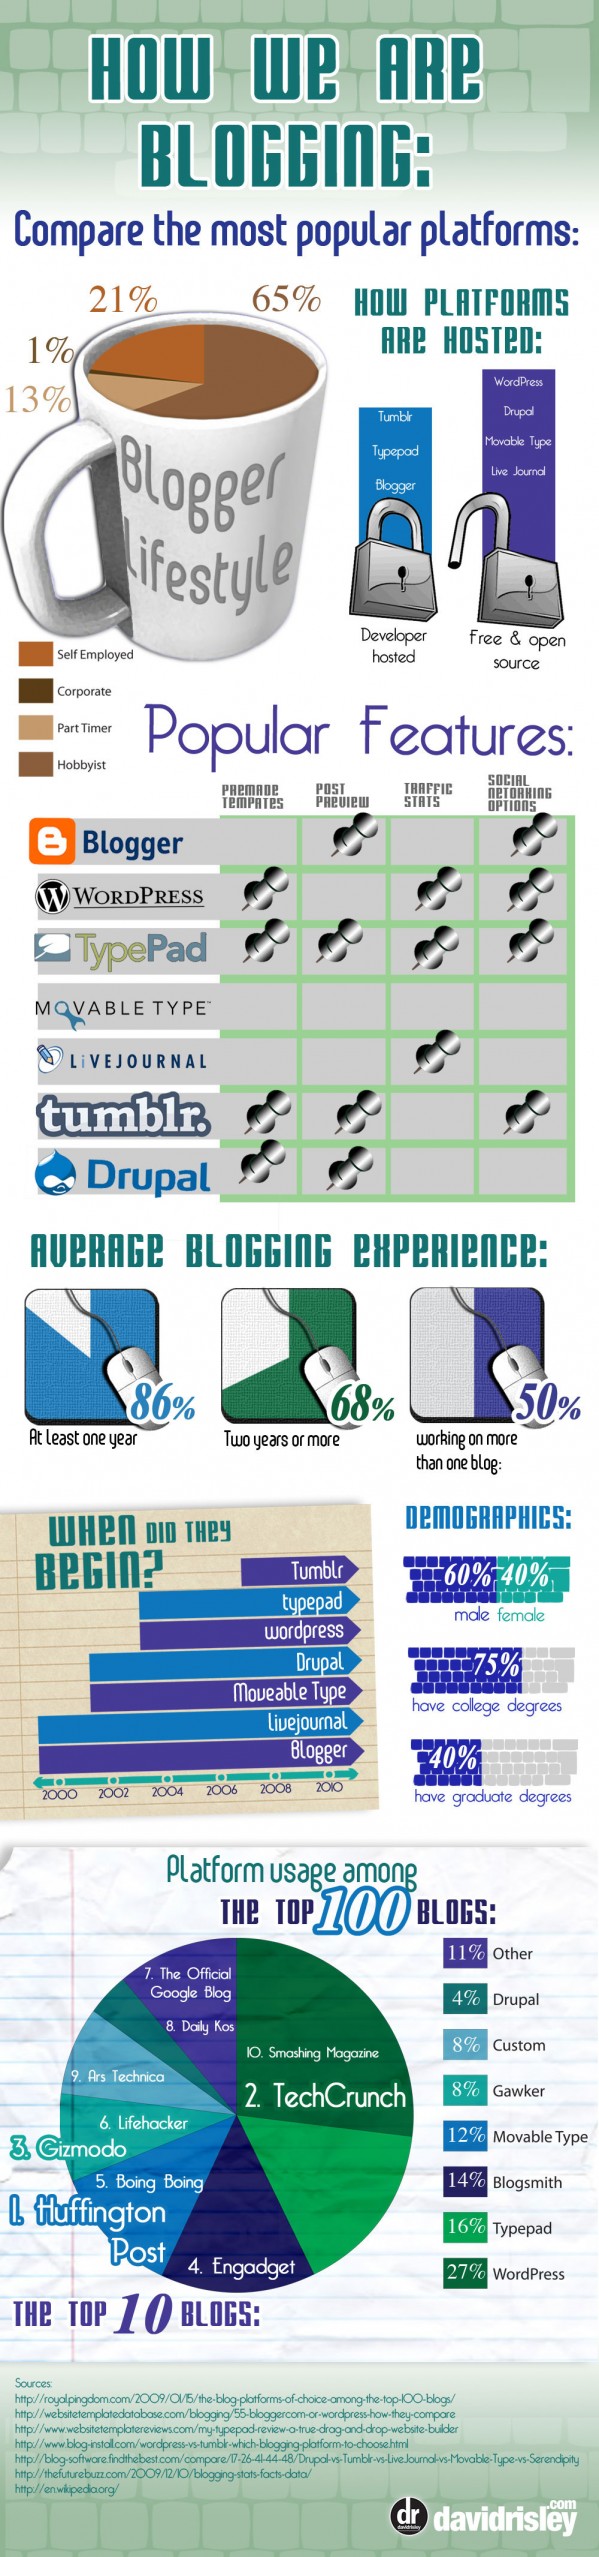 davidrisley Blogging Platforms Comparison